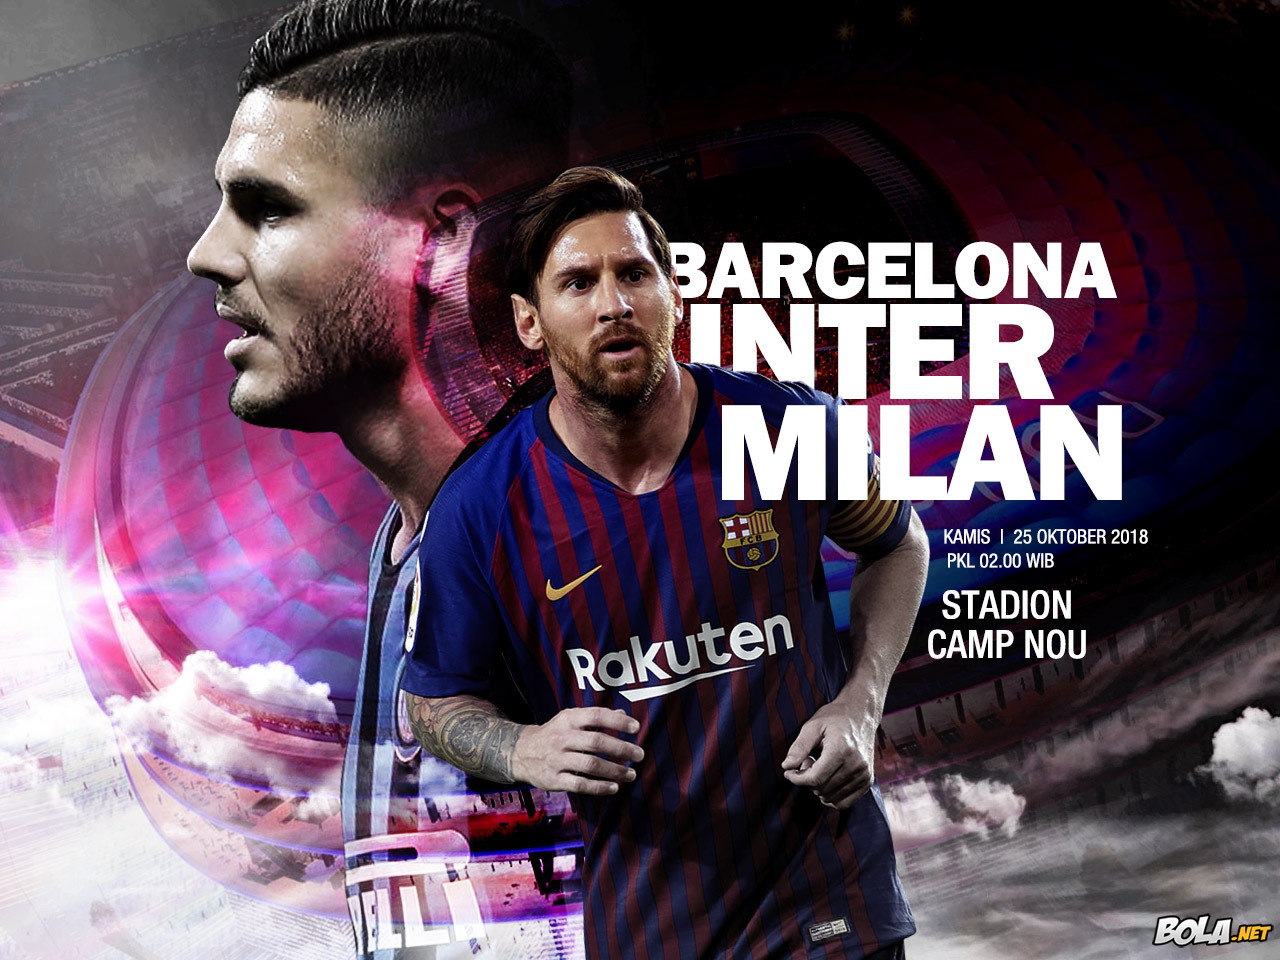 Deskripsi : Wallpaper Barcelona Vs Inter Milan, size: 1280x960